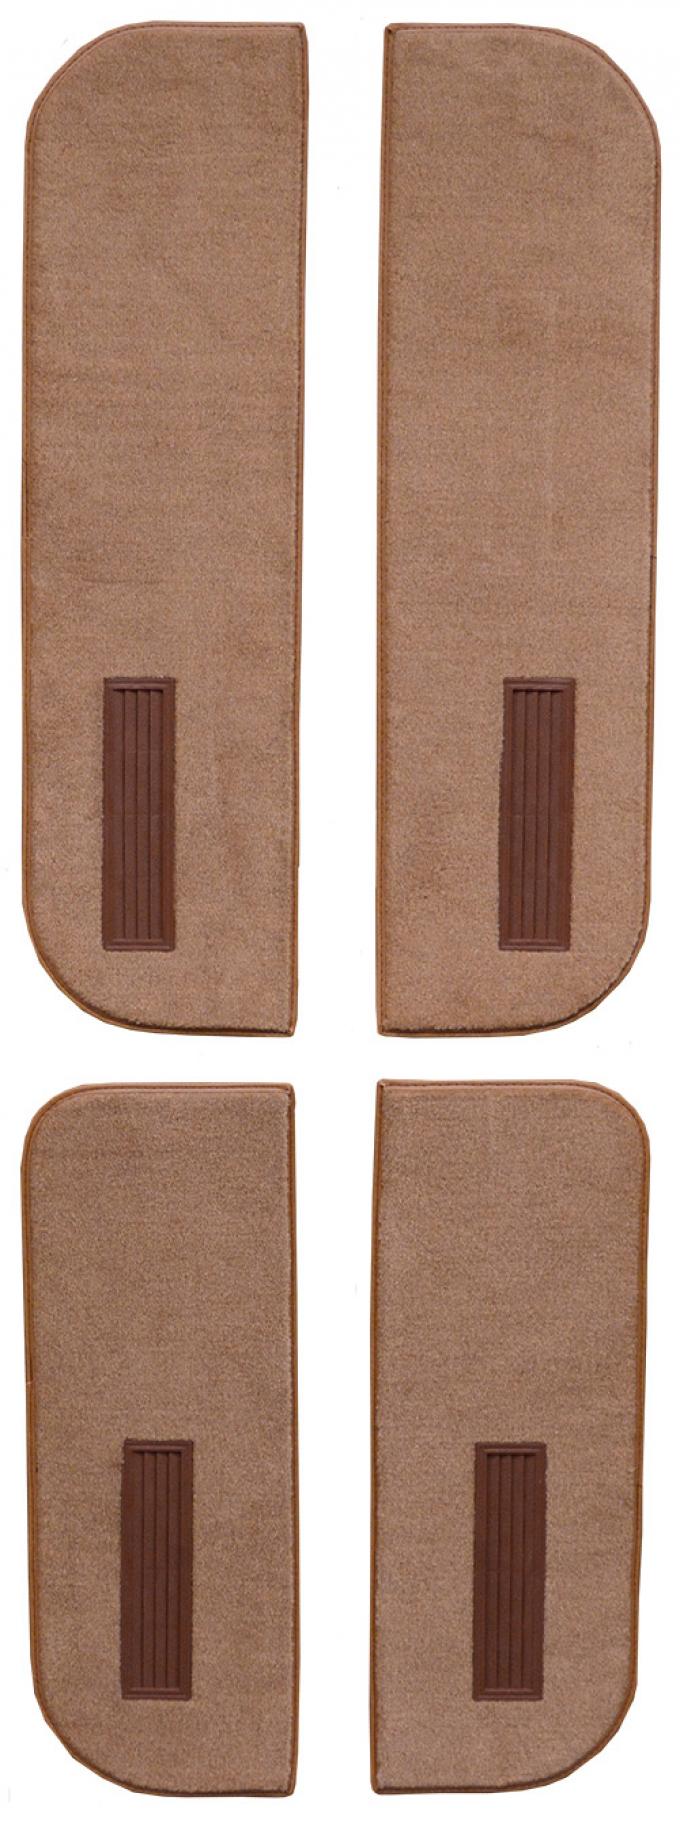 ACC 1975-1978 GMC C25 Suburban Door Panel Inserts on Cardboard w/Vents 4pc Cutpile Carpet